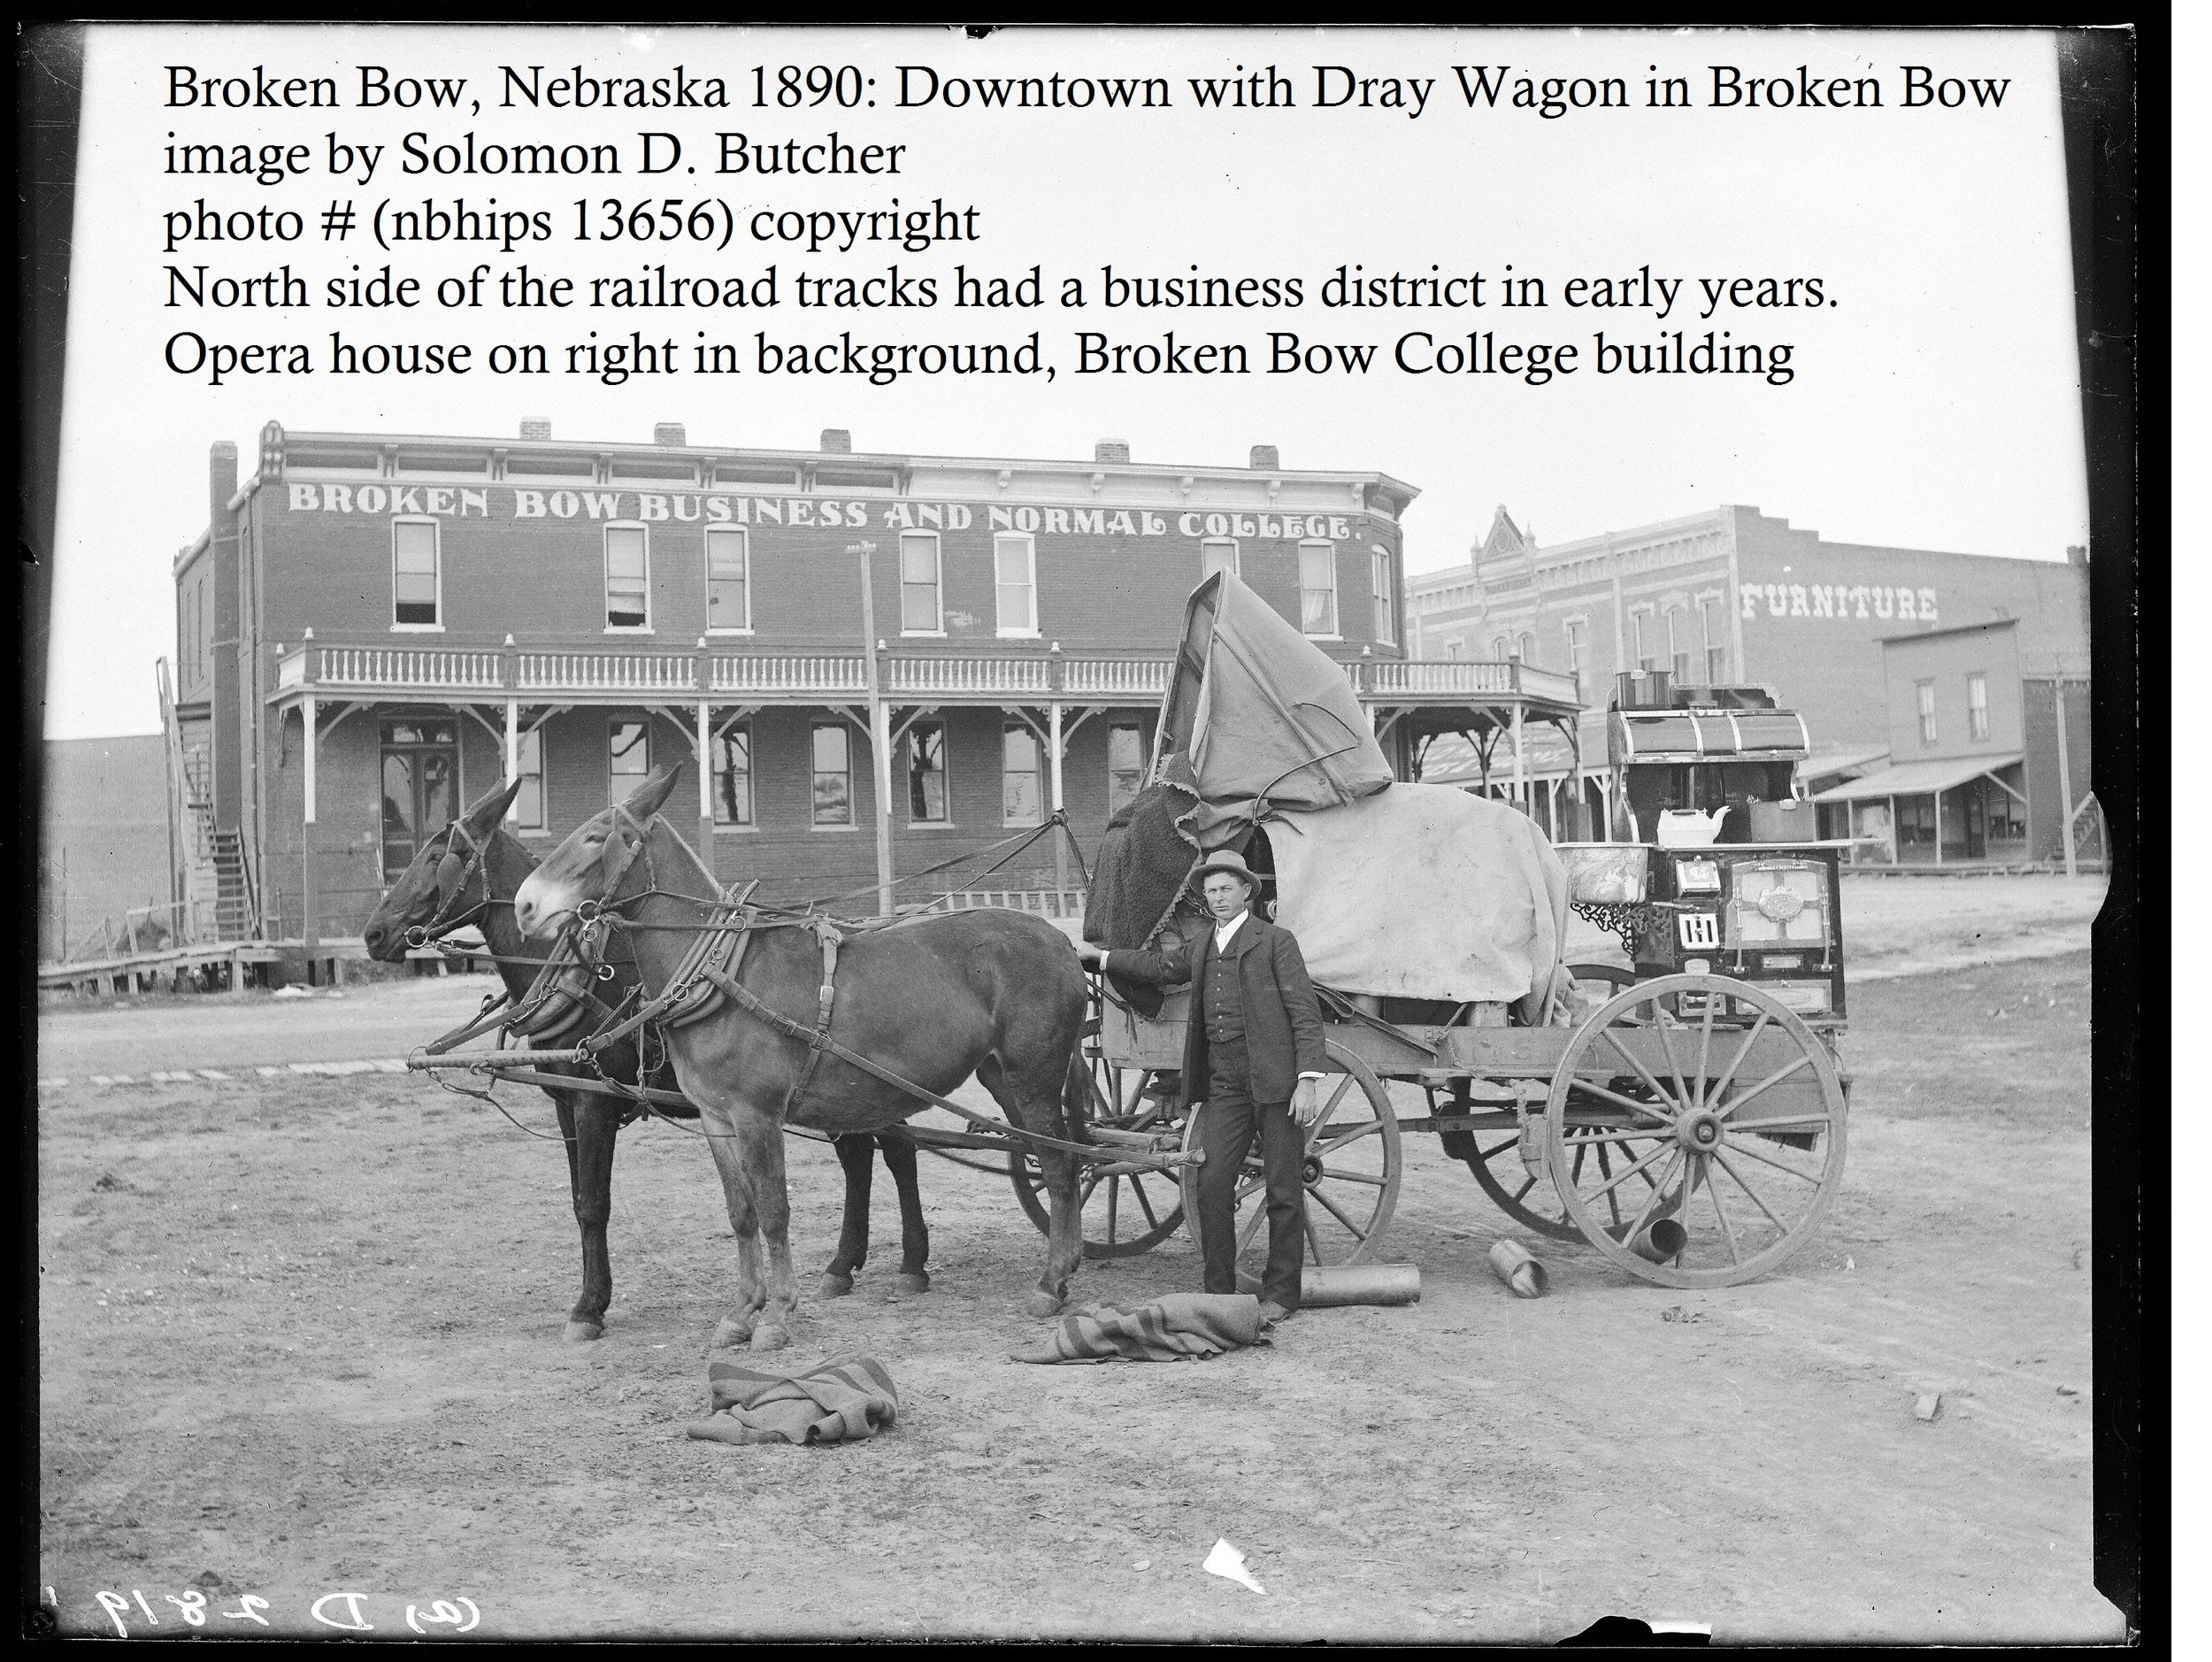 23 Butcher- Broken Bow - Dray Wagon in BB- 1890- 13656v.jpg